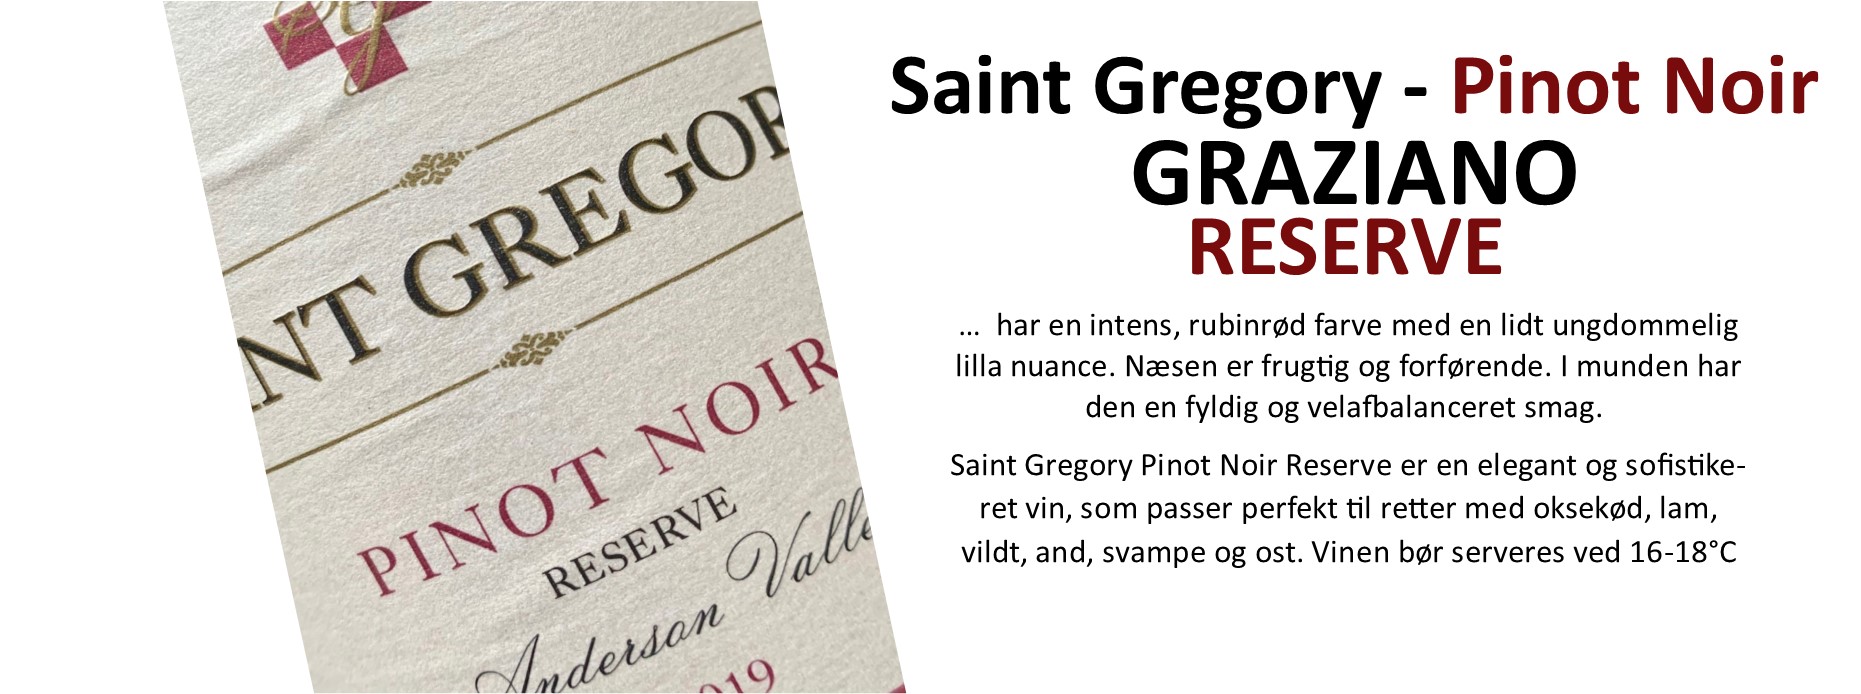 Saint Gregory Pinot Noir Reserve Graziano banner 3